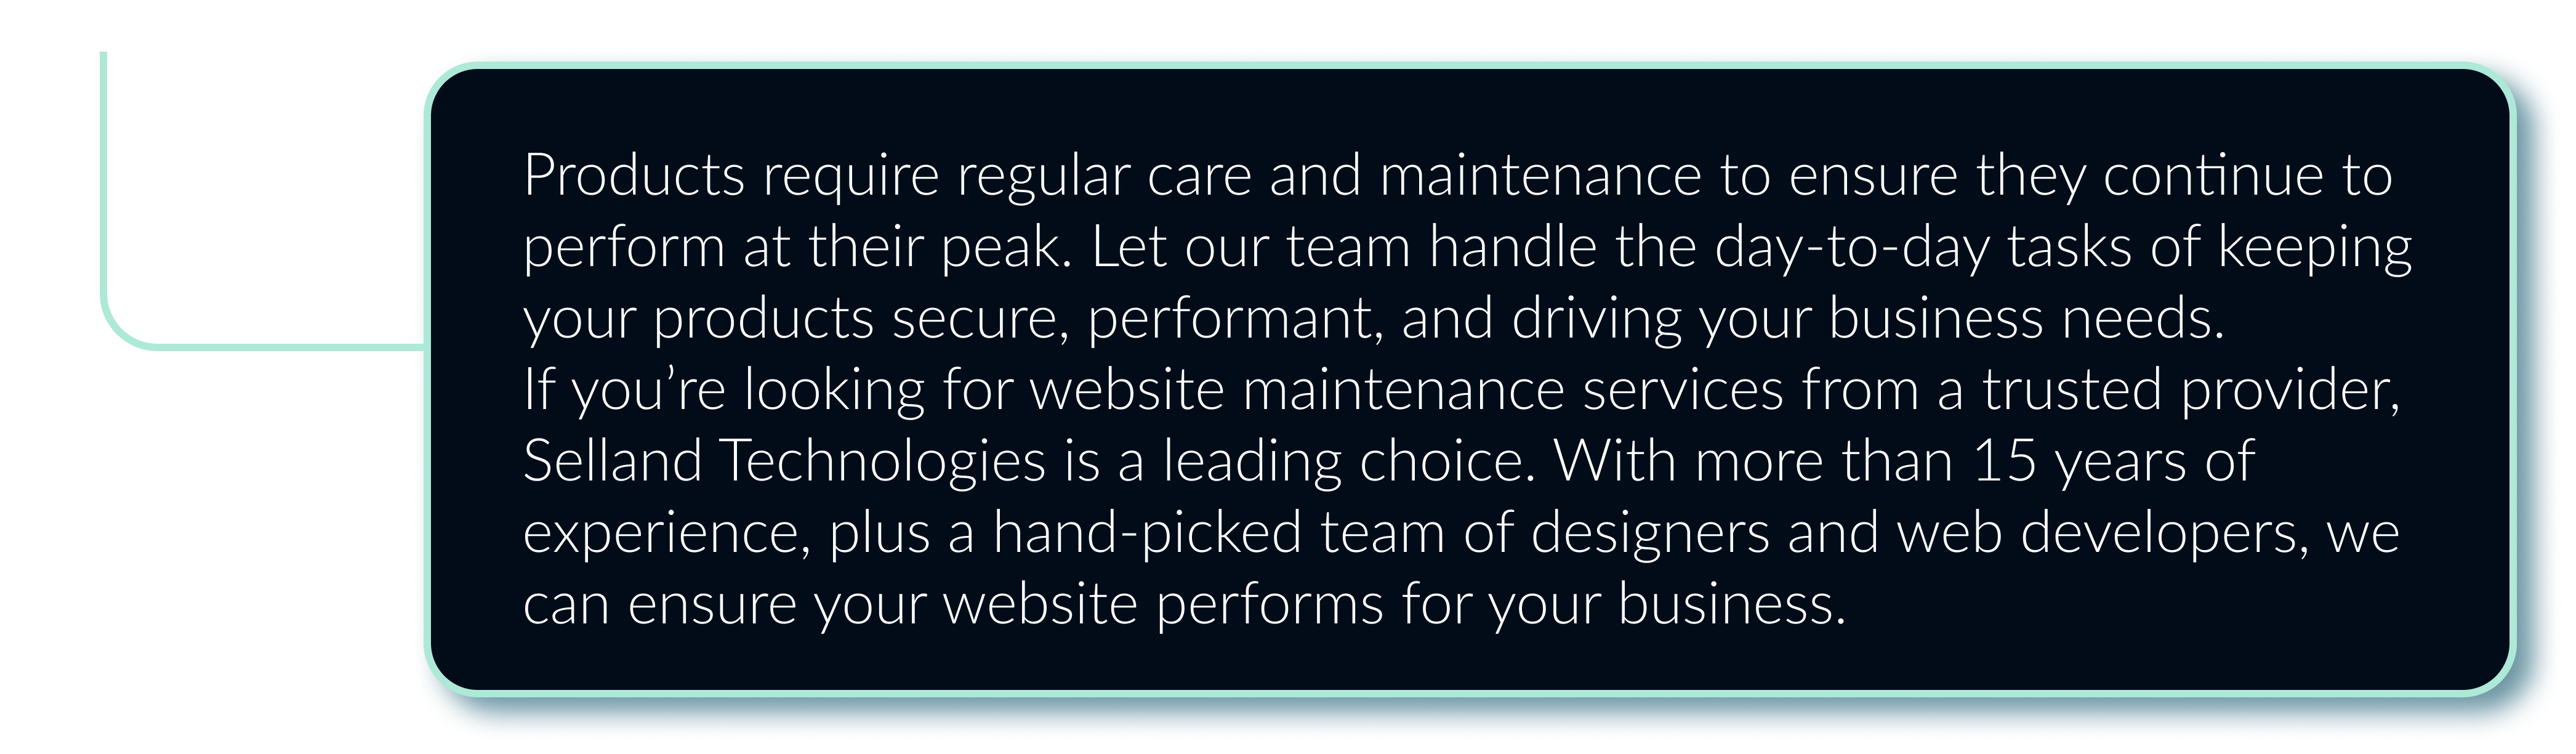 maintenance-support-information